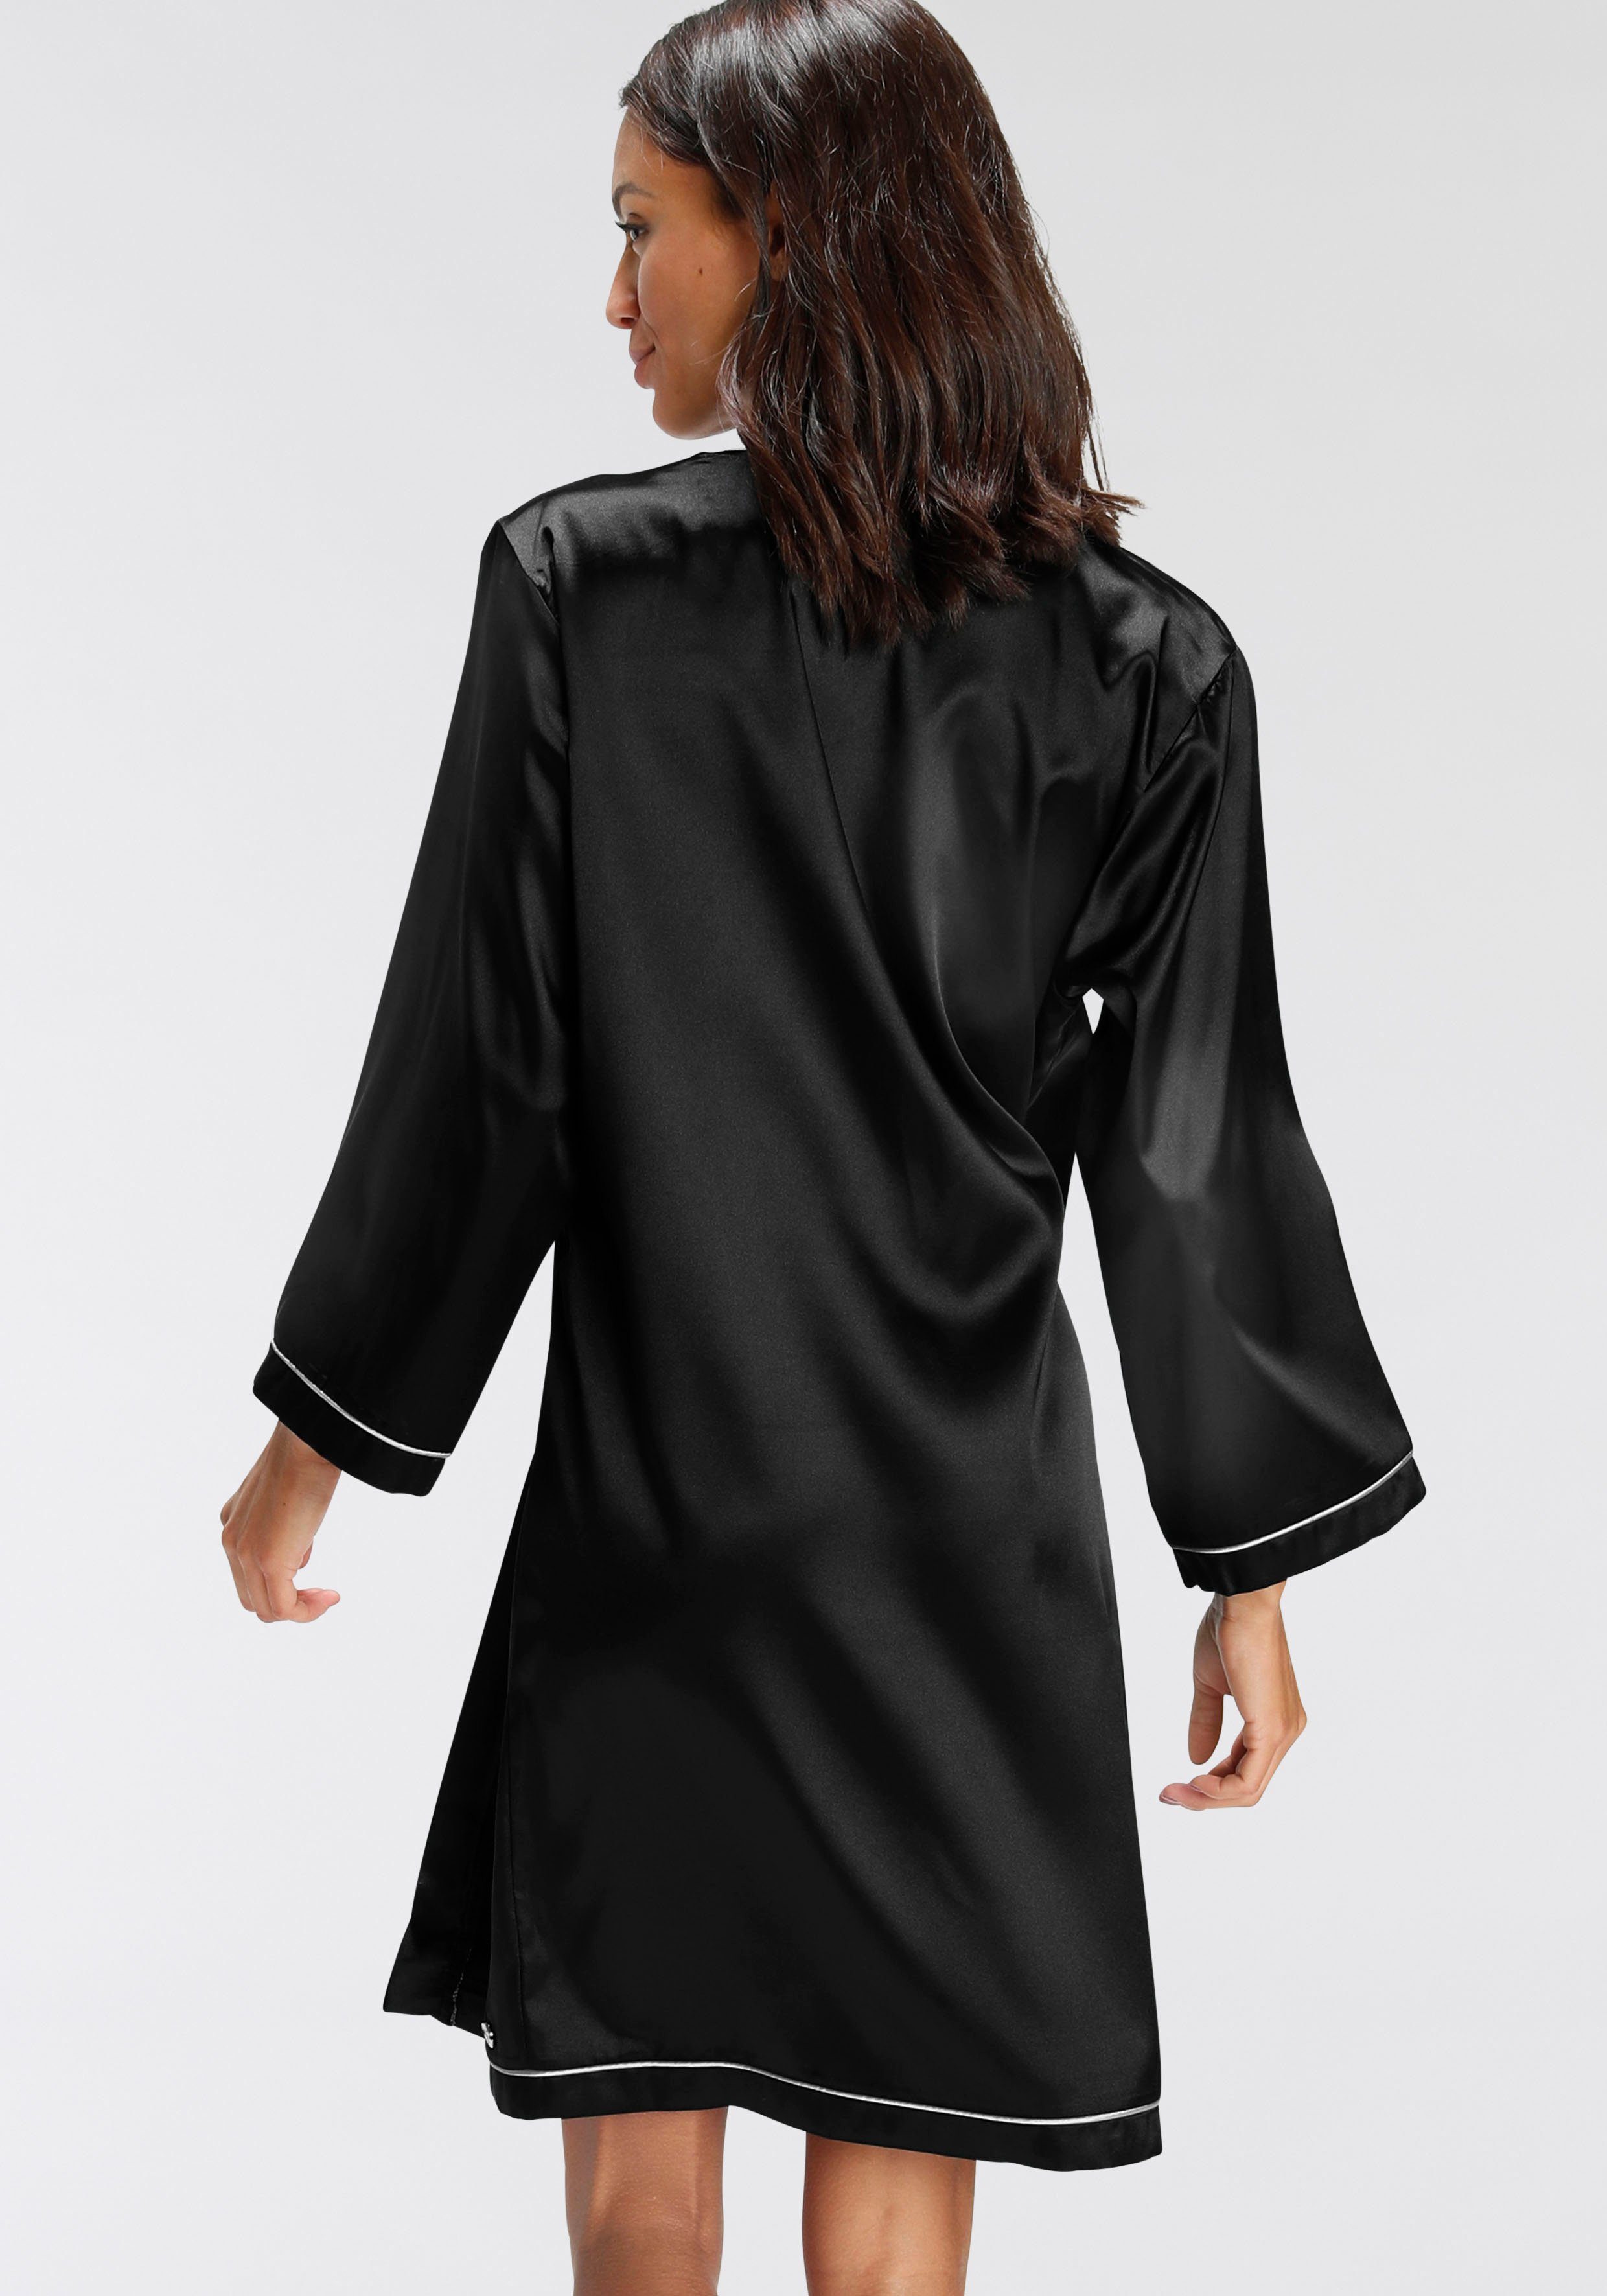 Satin, Kimono, Banani mit Kontrastpaspel-Details Kurzform, schwarz Bruno